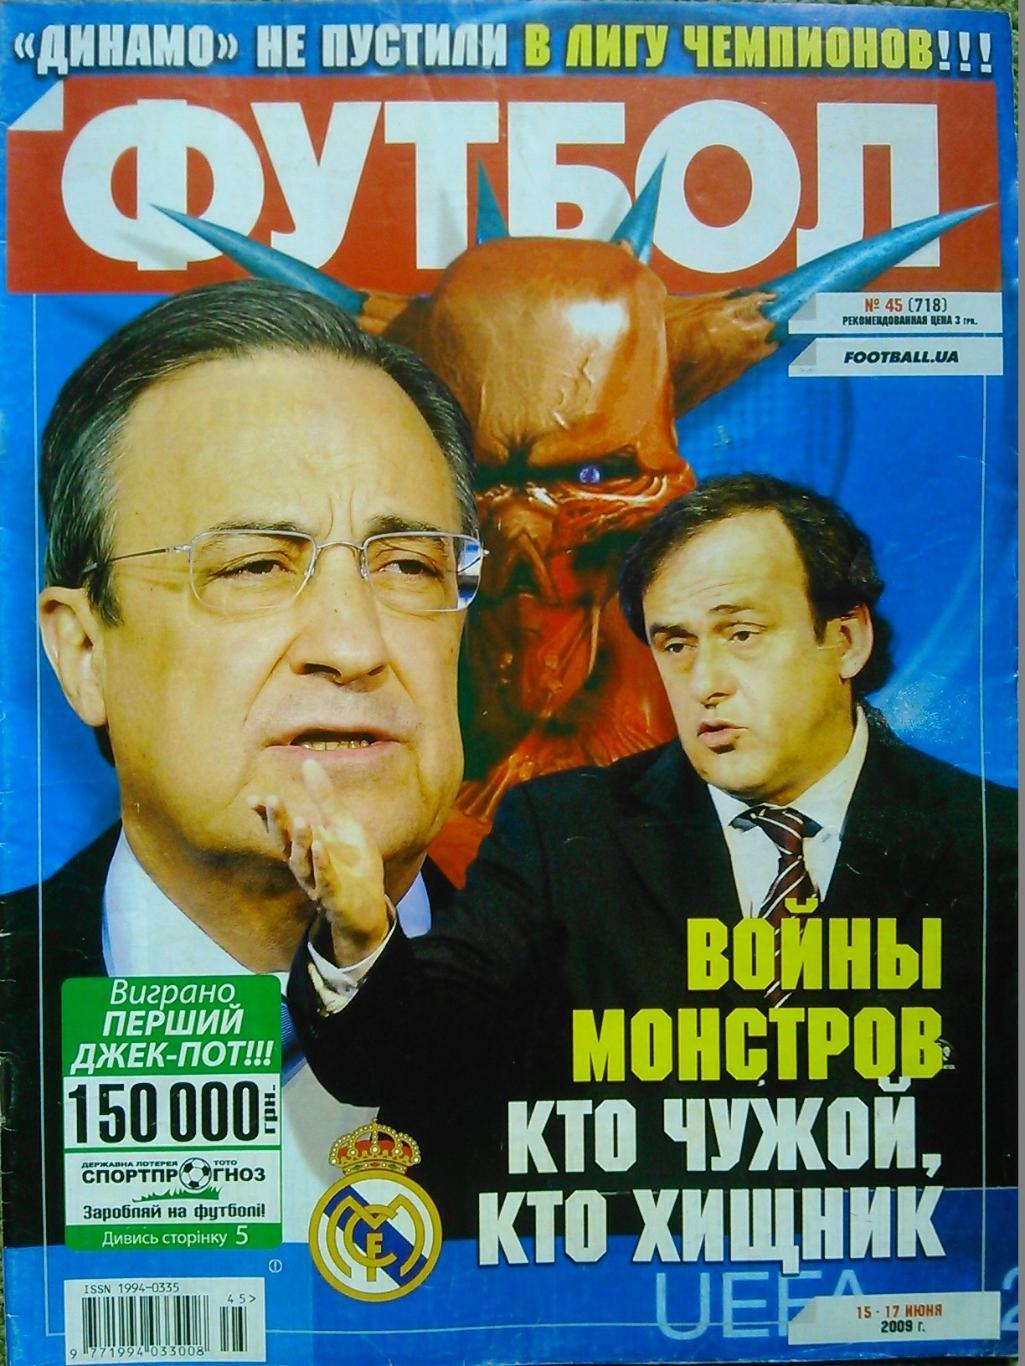 ФУТБОЛ.(Укр.)-2009 №45.(718). постер-. Оптом скидки до 50%